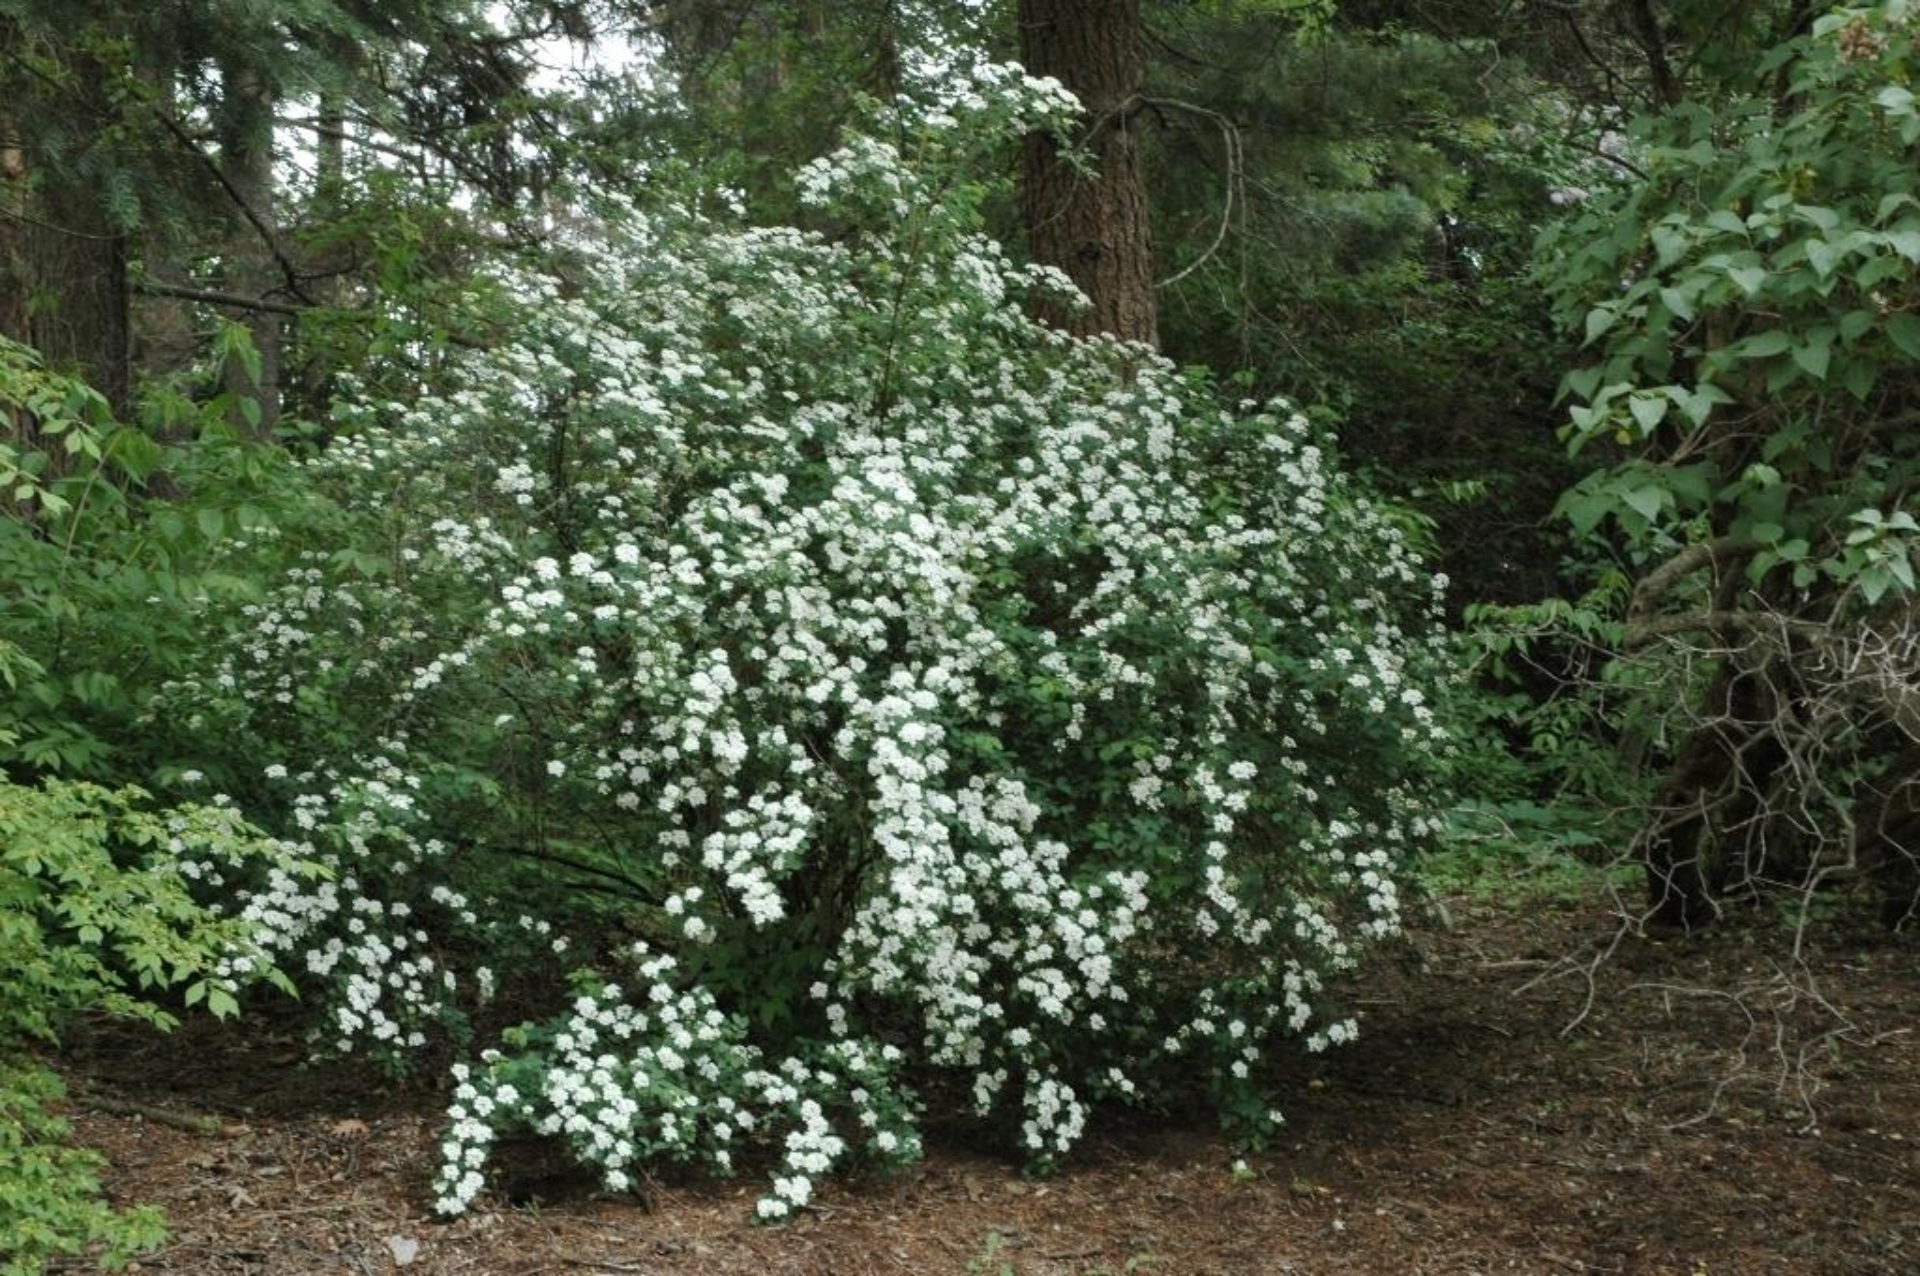 Image of Bridal spirea shrub in a woodland setting